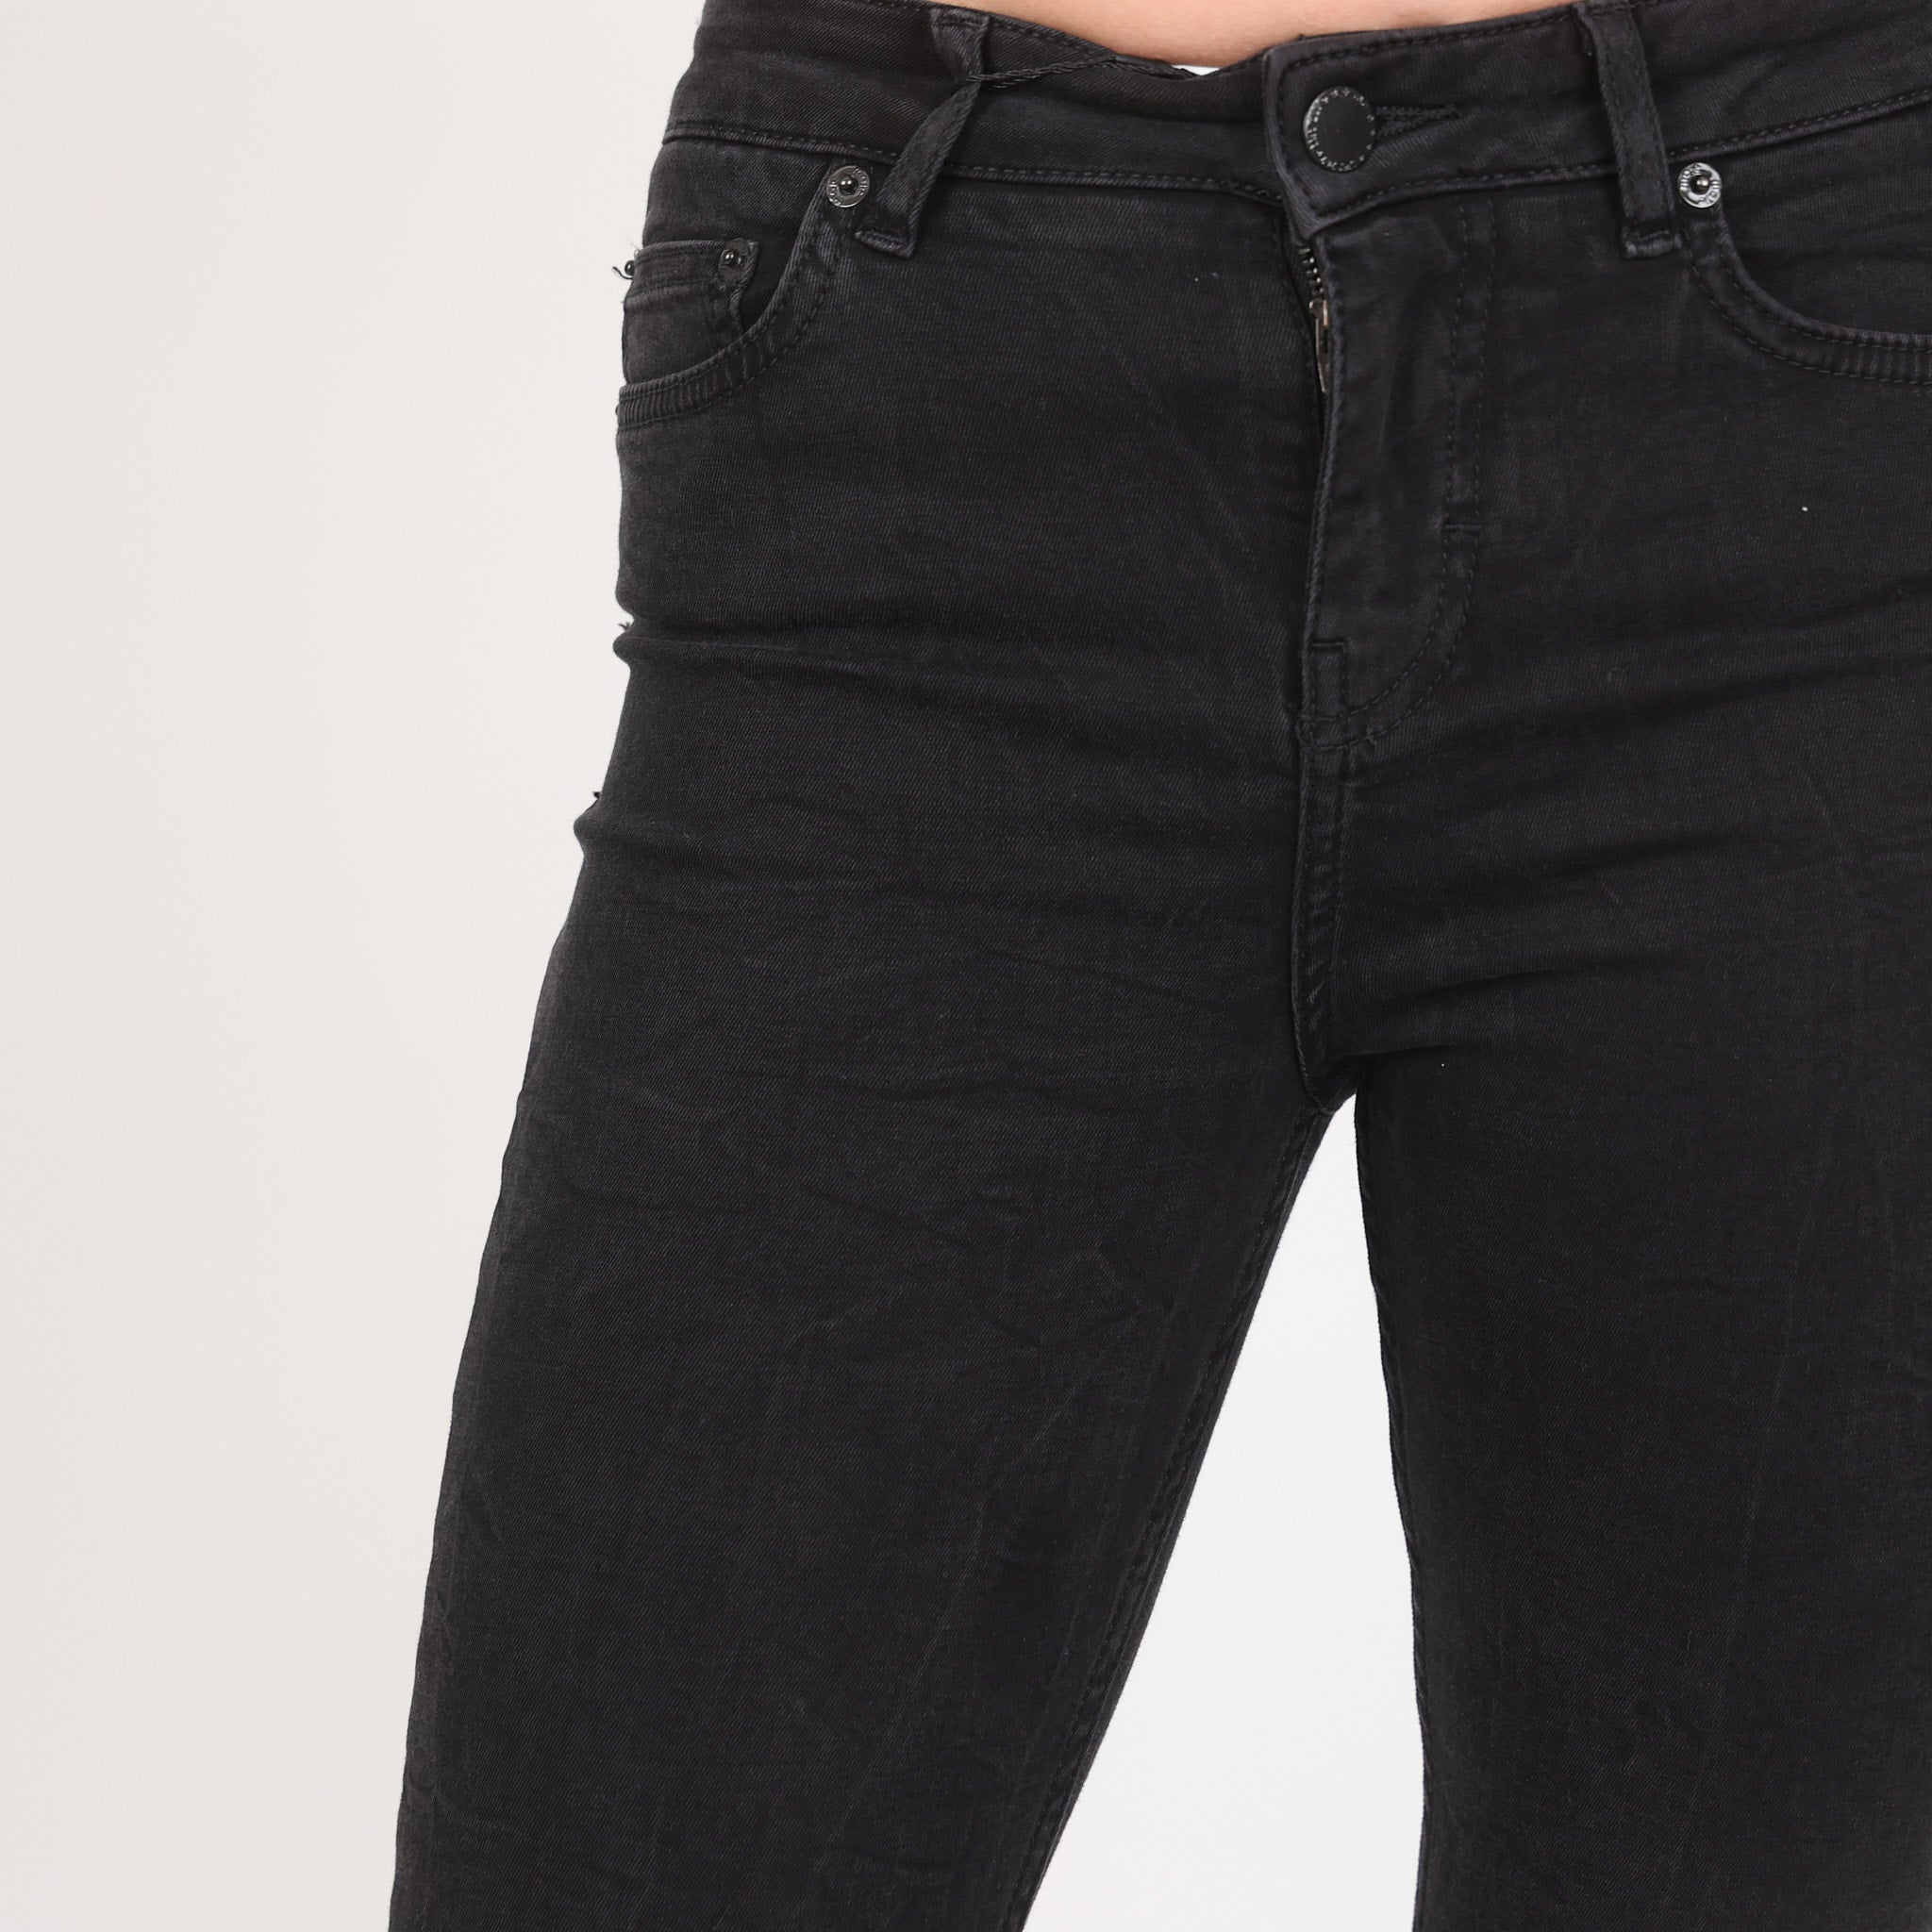 Jeans, UK Size 6